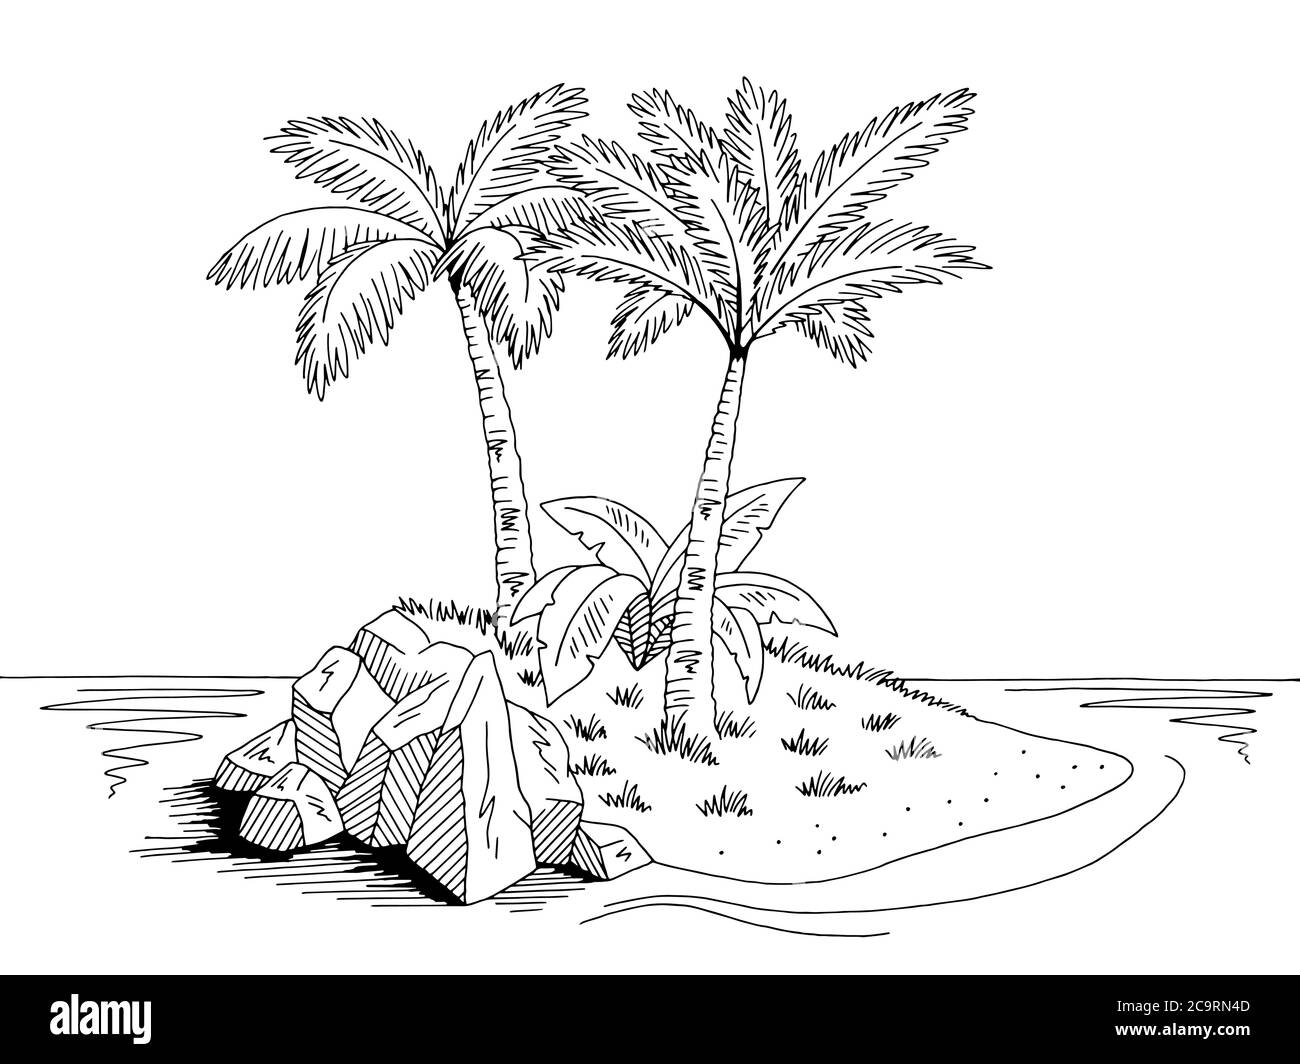 Insel Grafik schwarz weiß Landschaft Skizze Illustration Vektor Stock Vektor